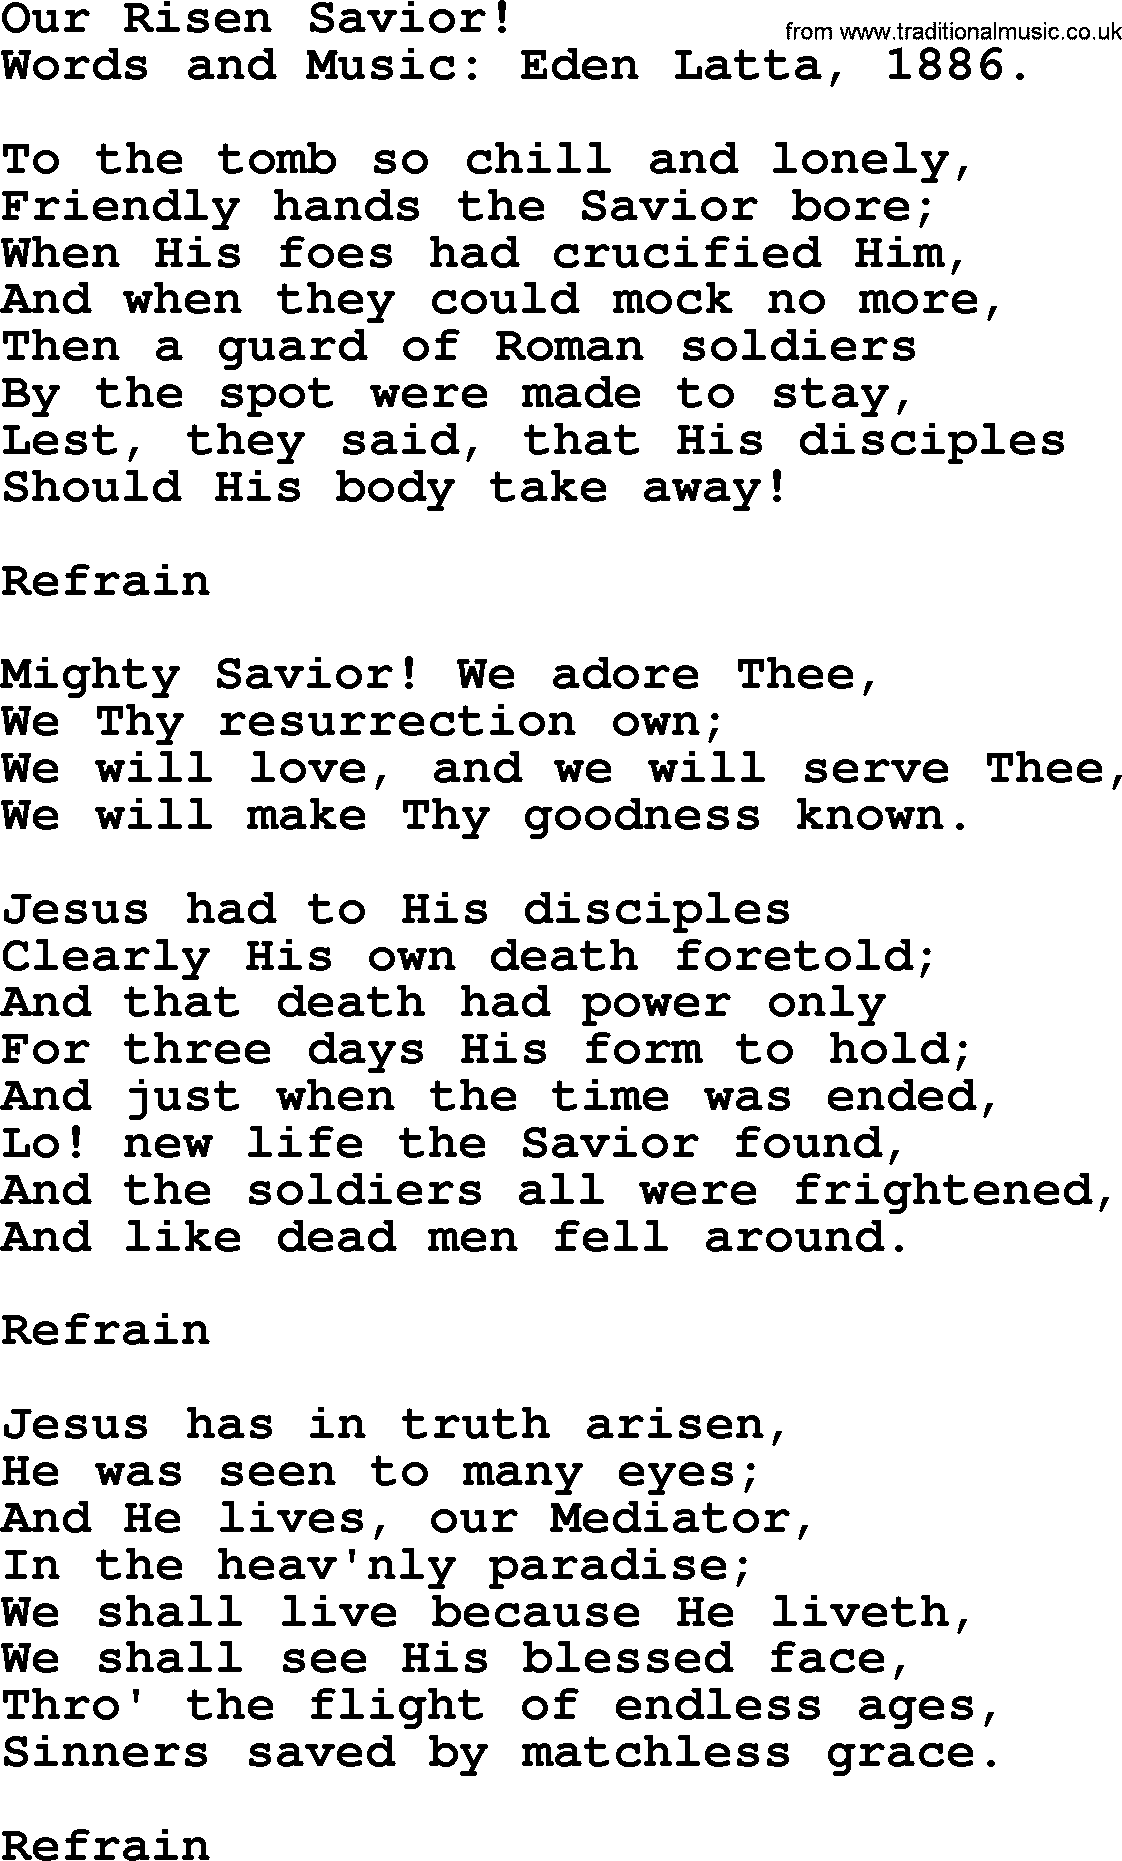 Easter Hymns, Hymn: Our Risen Savior!, lyrics with PDF